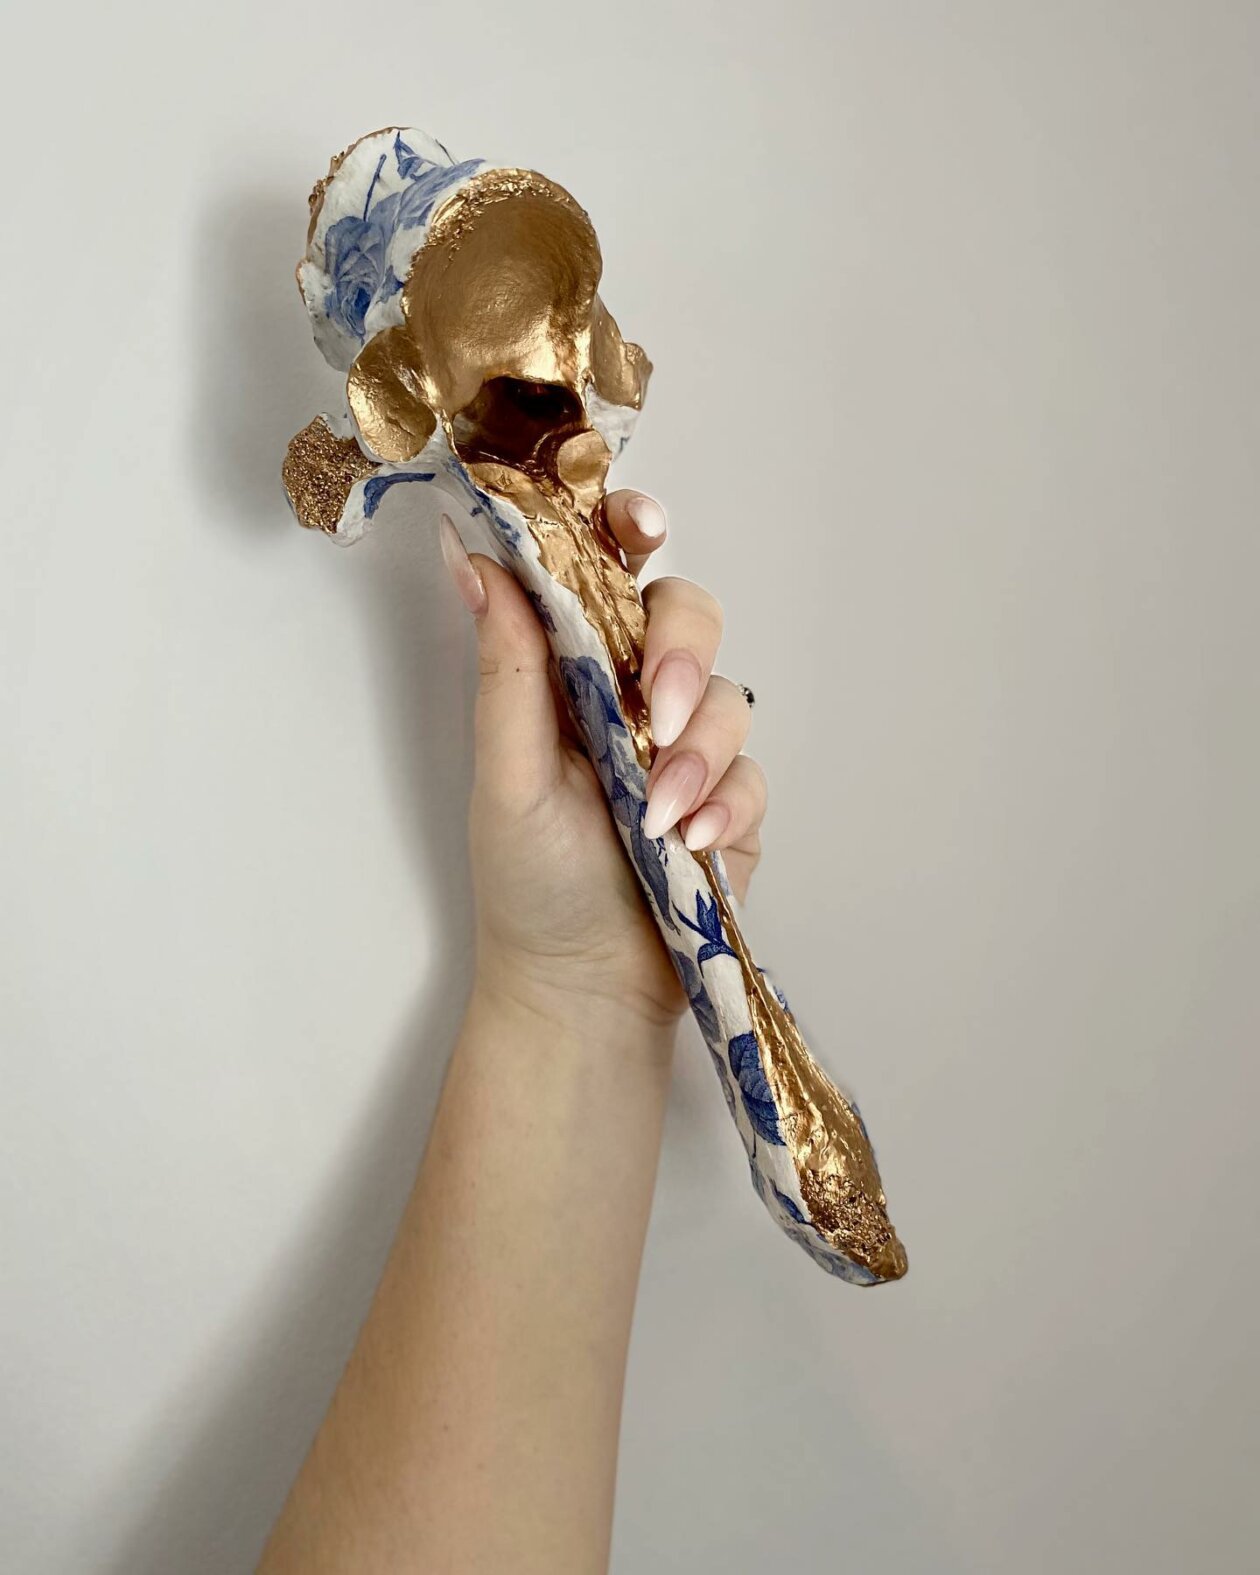 The Floral Decorated Bone And Skull Art Of Emmanuelle Jobidon (3)